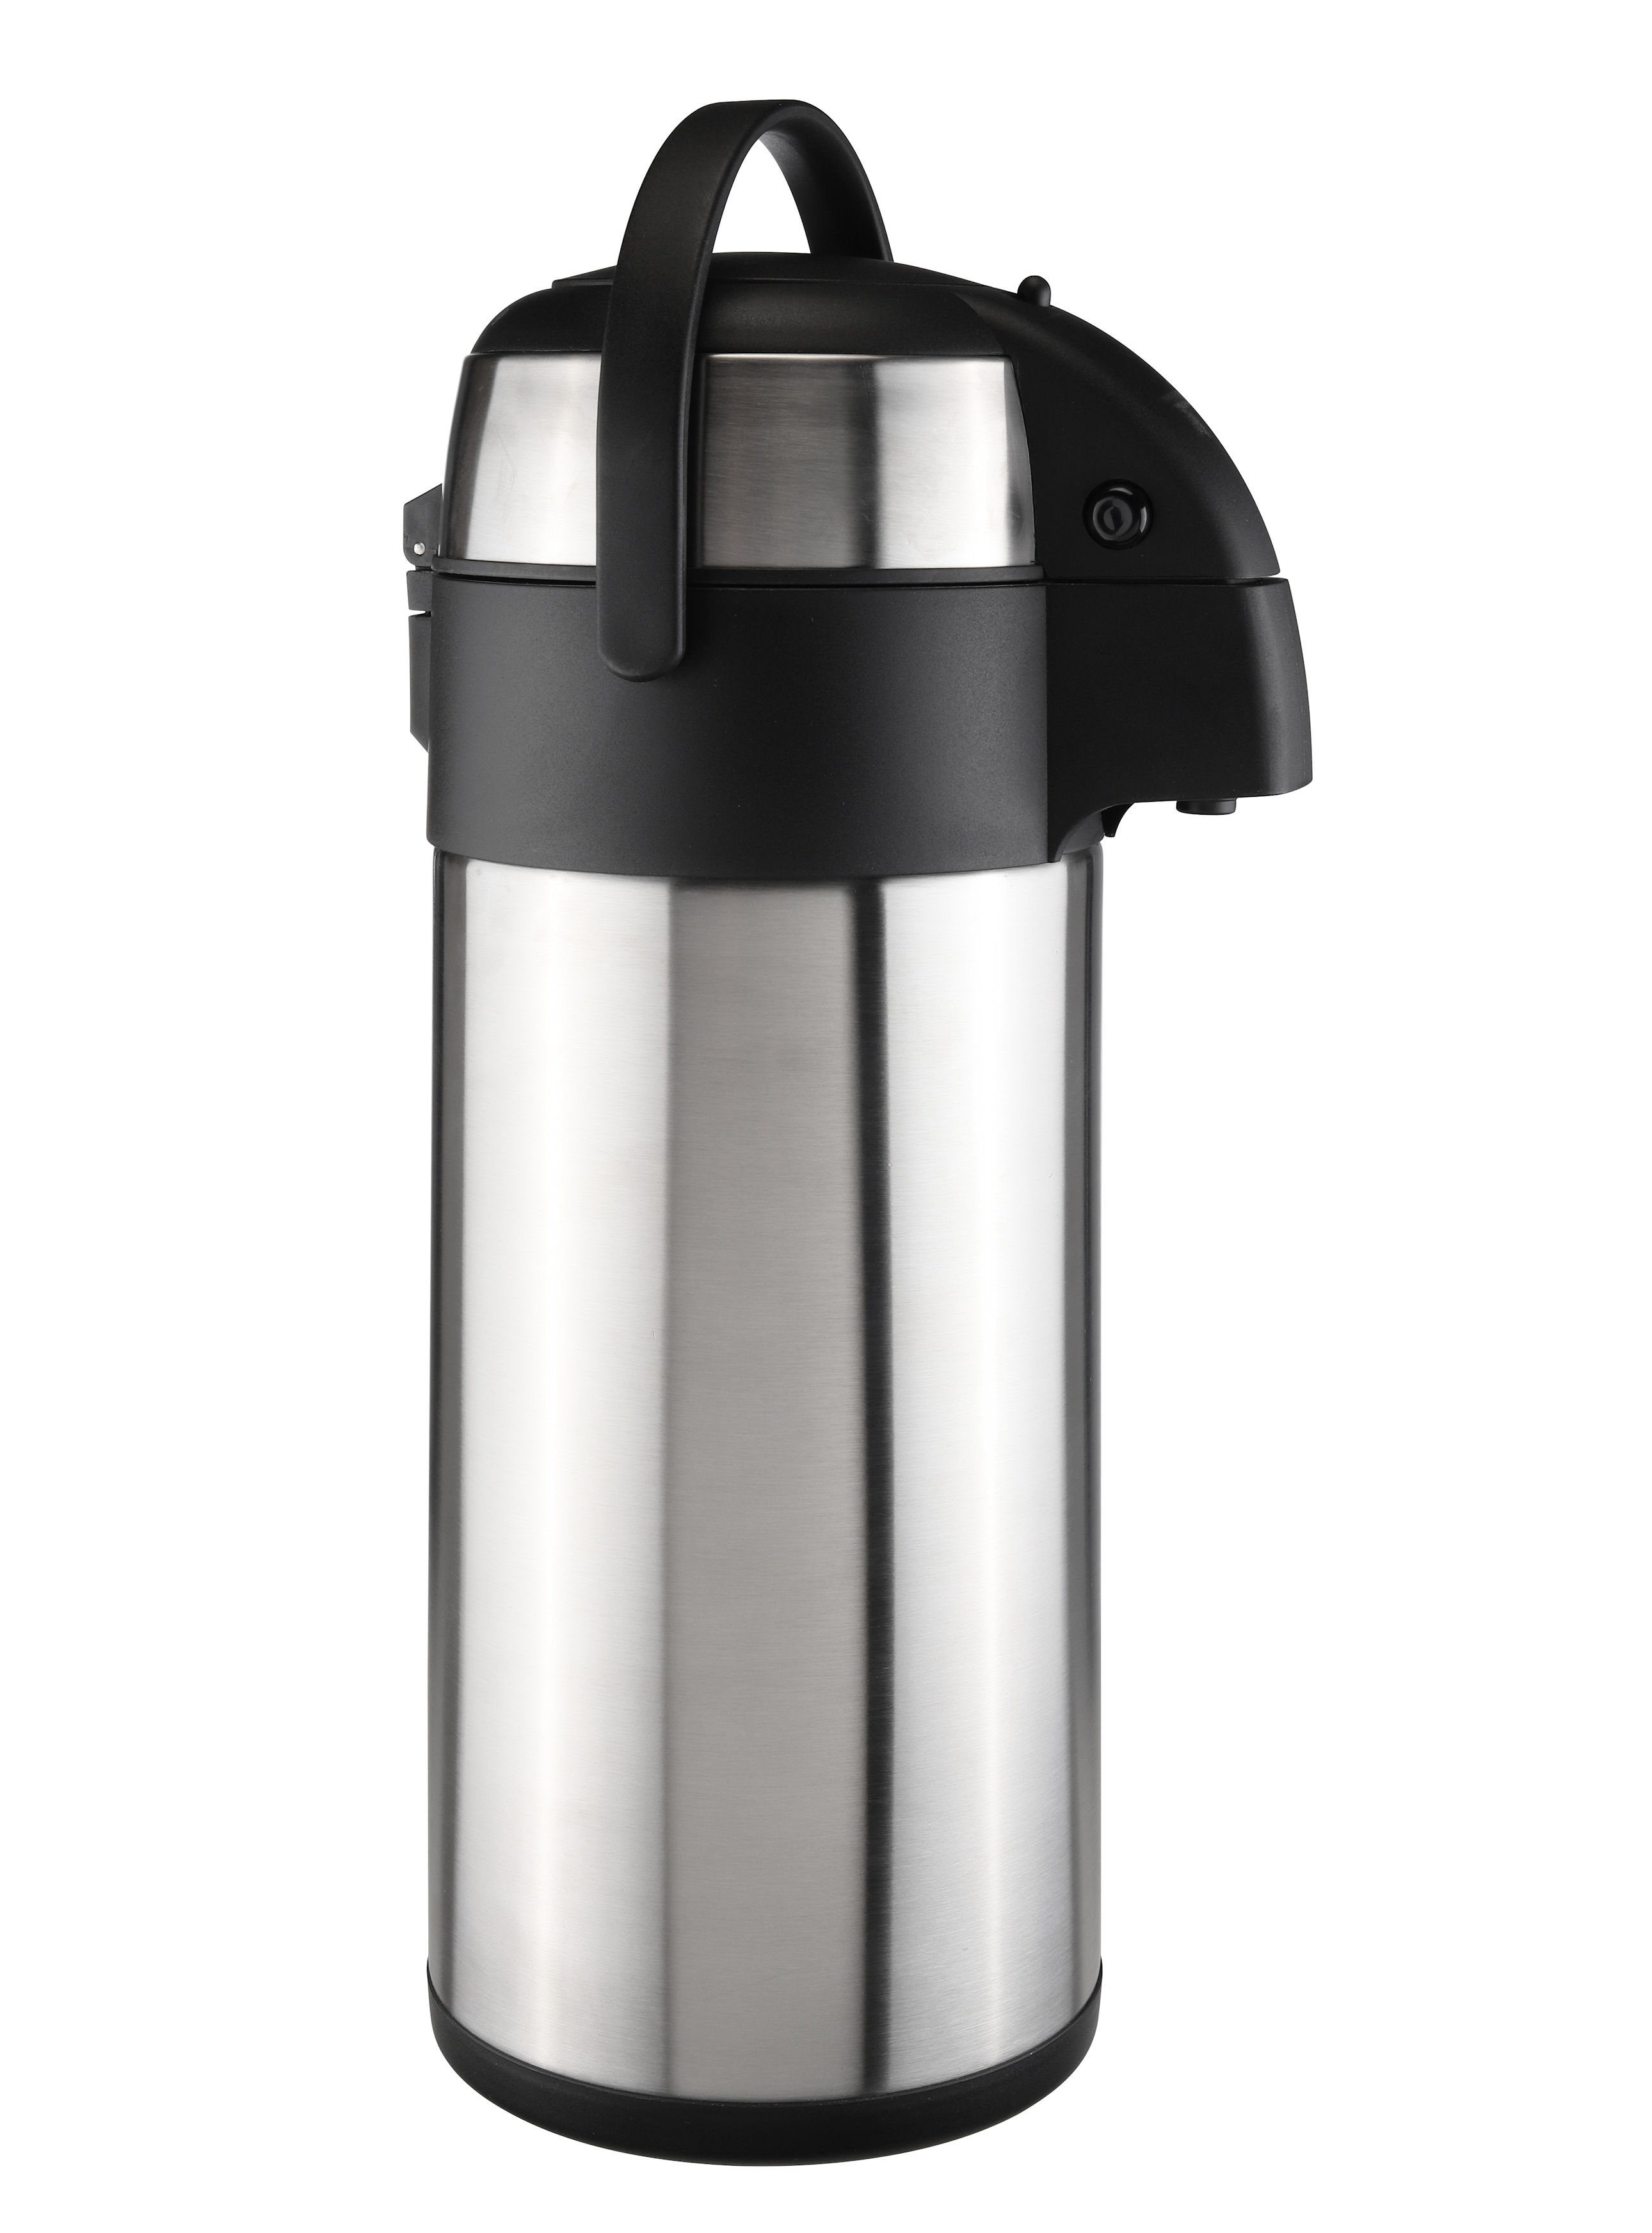 Spetebo Thermobehälter Airpot Isolier Pumpkanne drehbar - 5 Liter, Edelstahl, Edelstahl Thermo Kaffee Tee Kanne